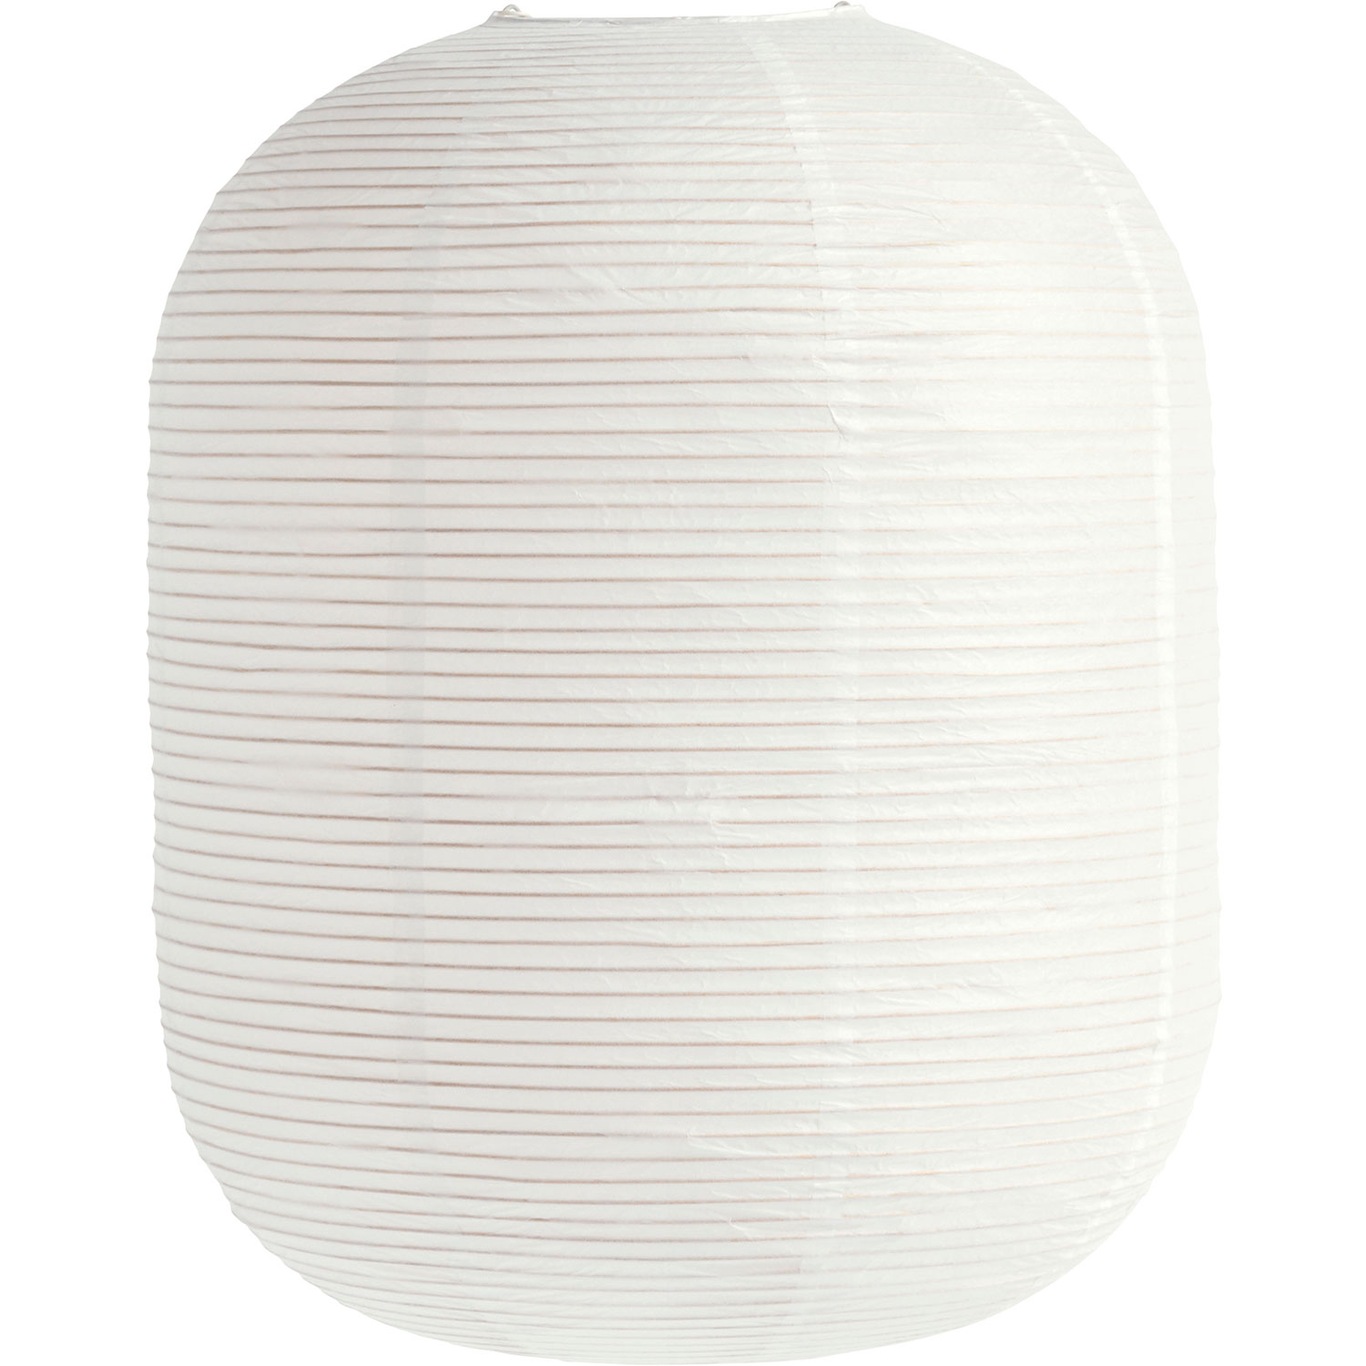 Common Lampenschirm Weiß, Oblong